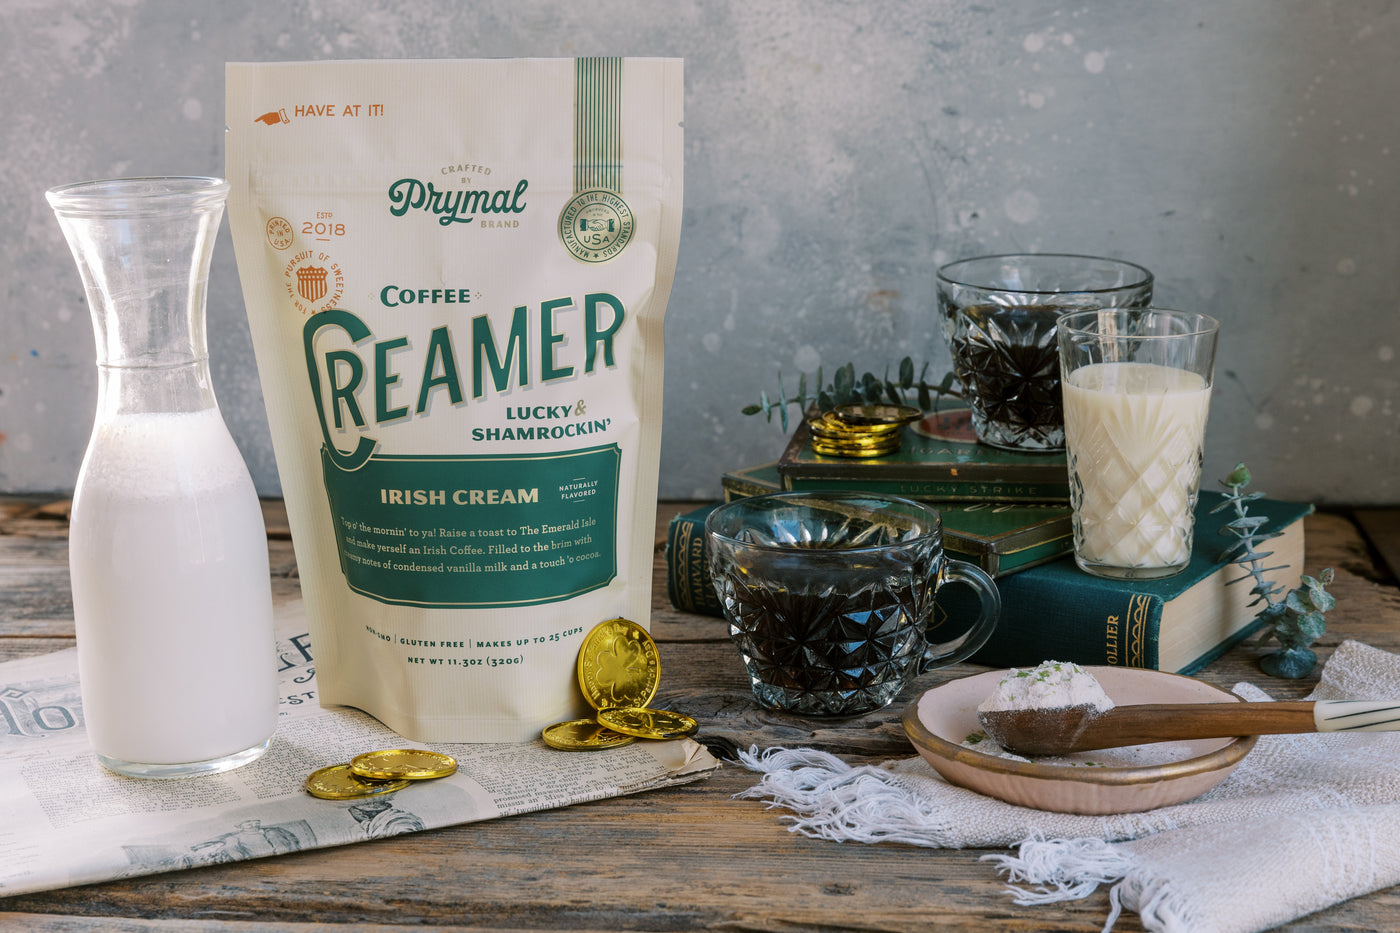 Kickstart Bundle - Prymal Sugar Free Coffee Creamer Starter Bundle with  Frother – Prymal Coffee Creamer